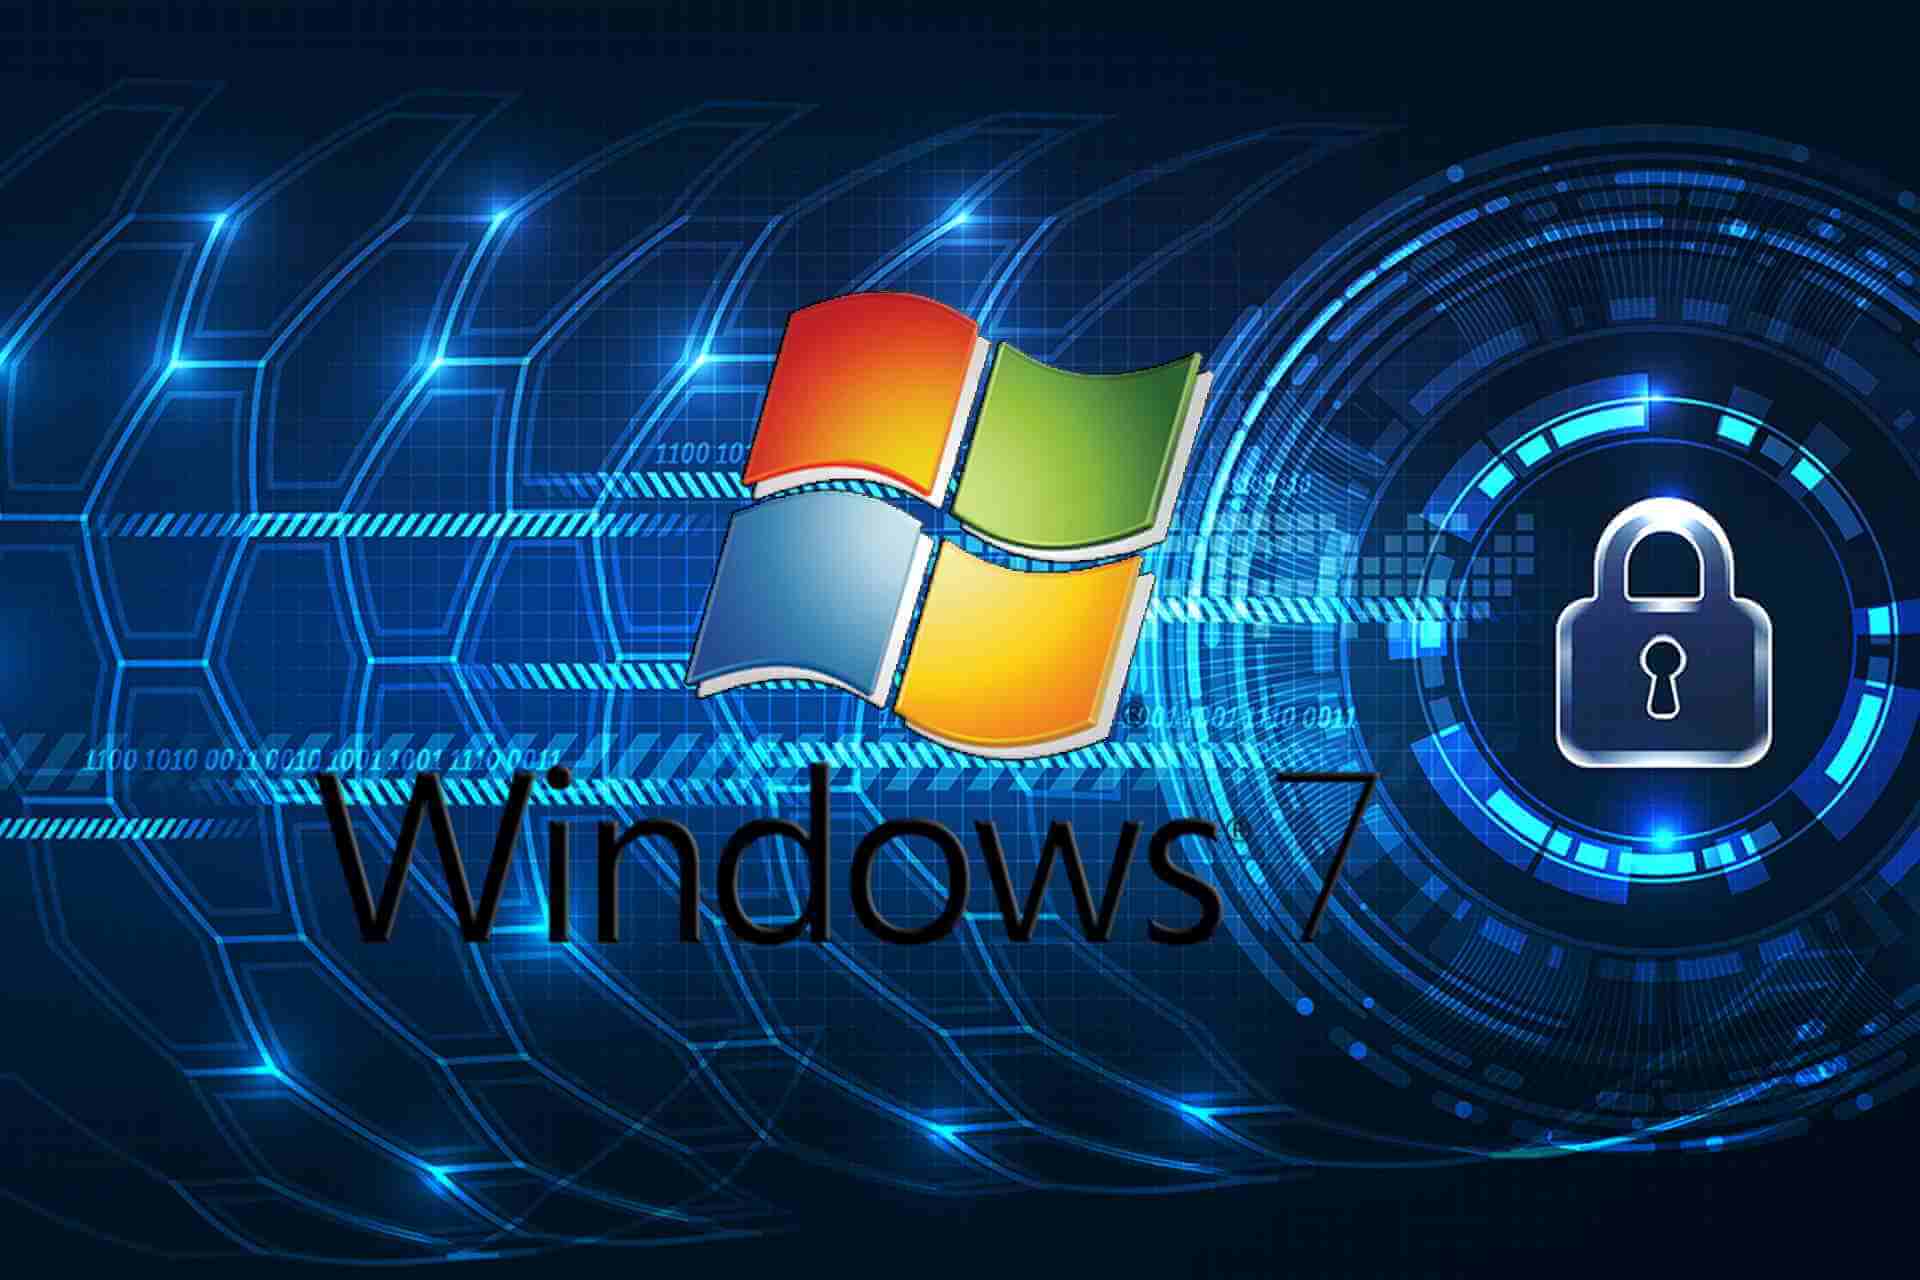 free antivirus for windows 7